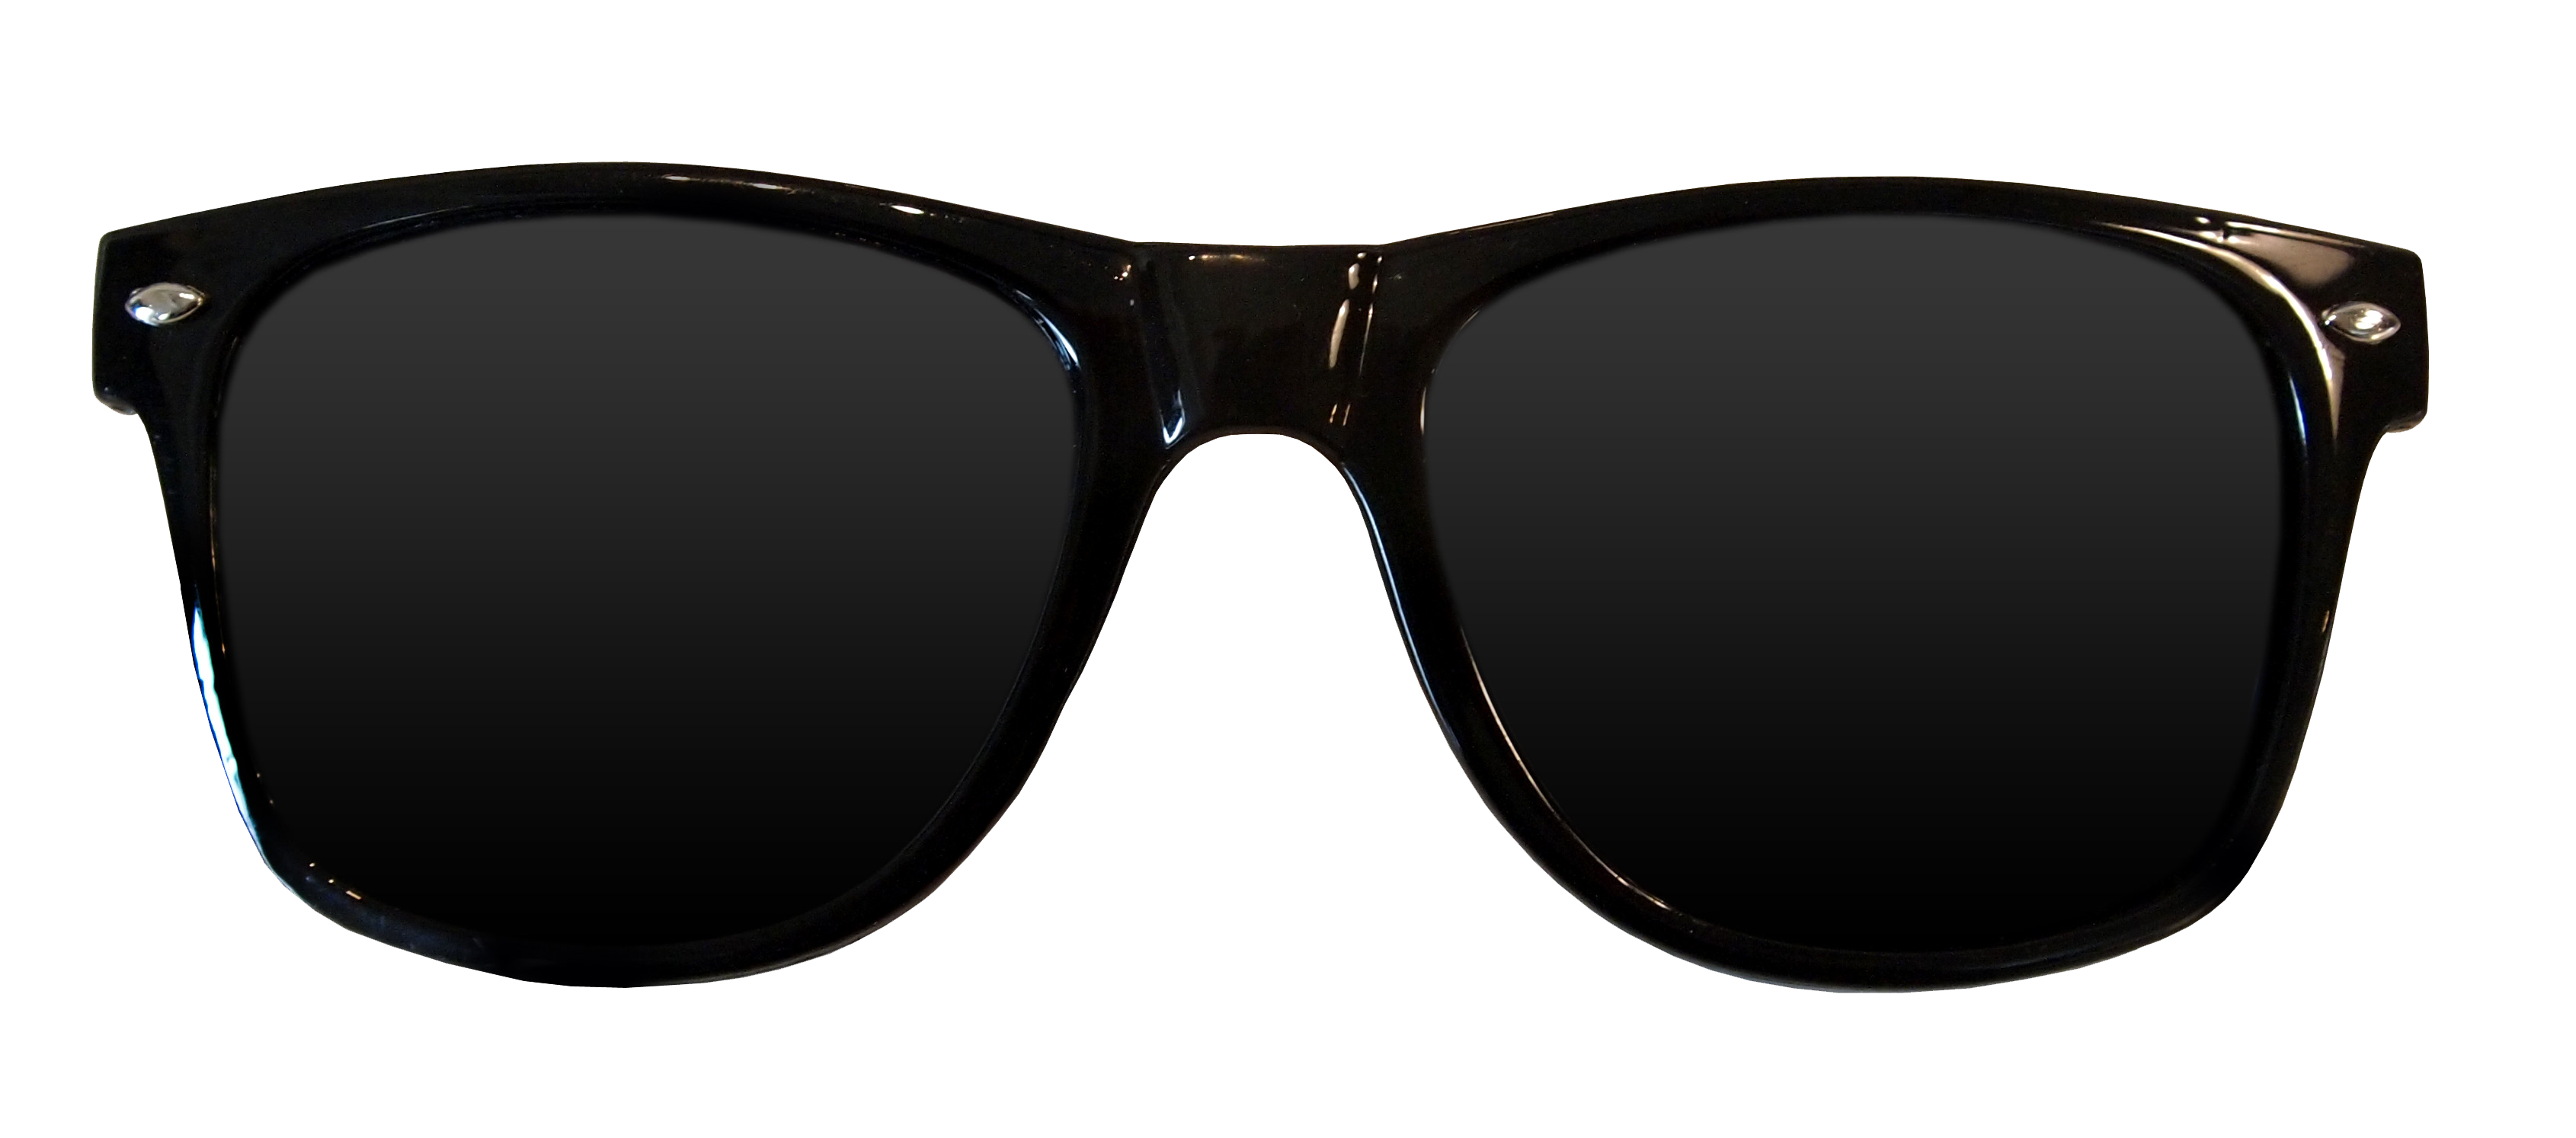 Sun Glasses Clipart Transparent PNG Hd, Eyewear Sun Glasses Glass